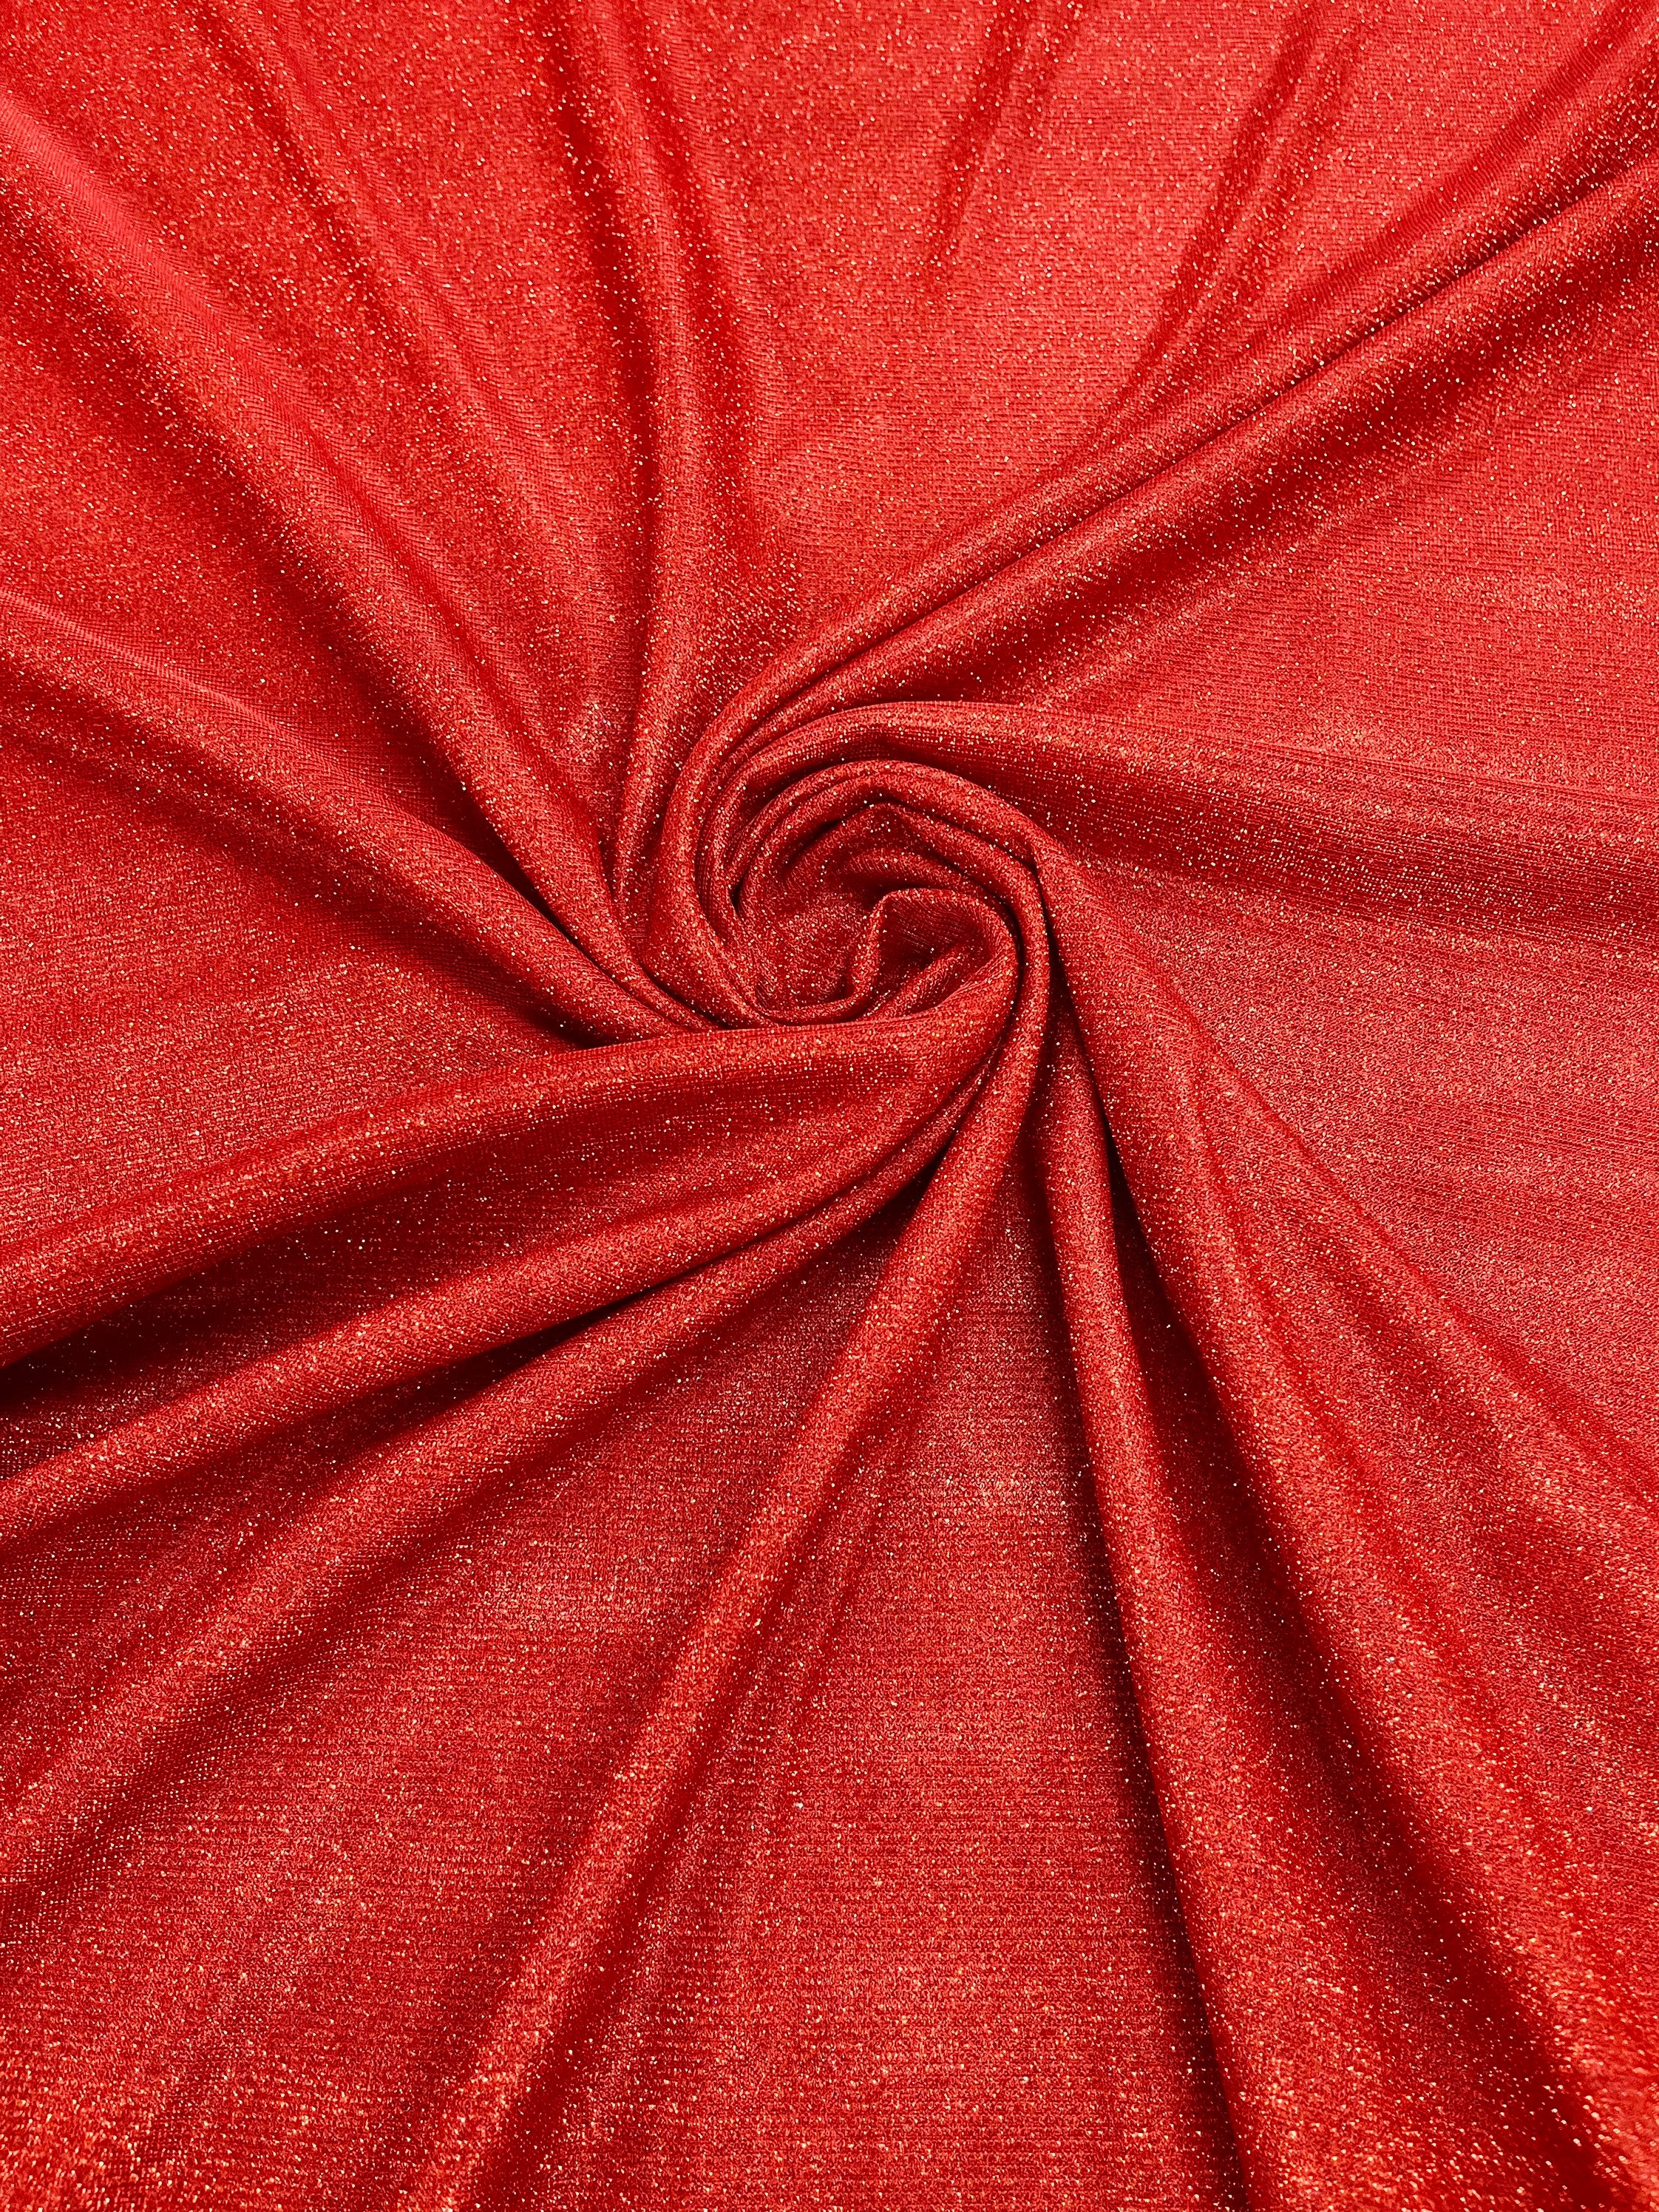 Red Glitter Fabric 